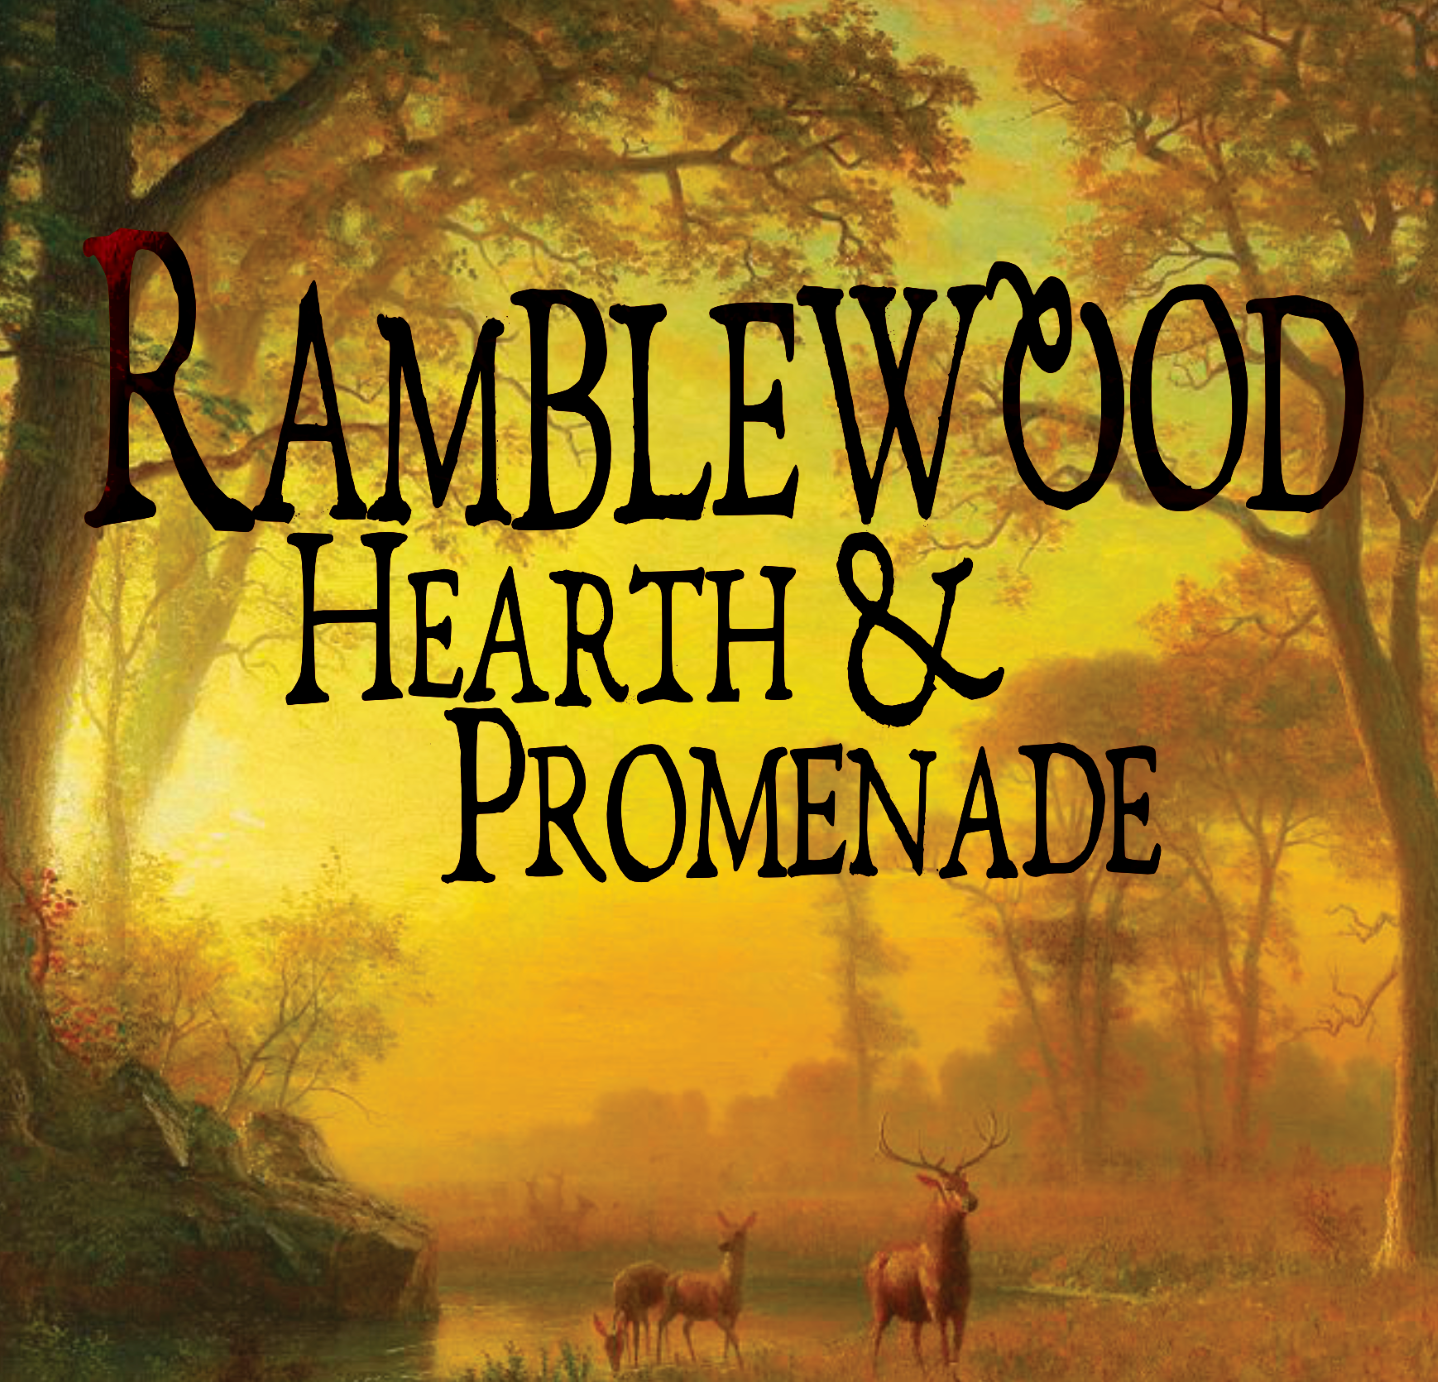 Ramblewood Hearth & Promenade